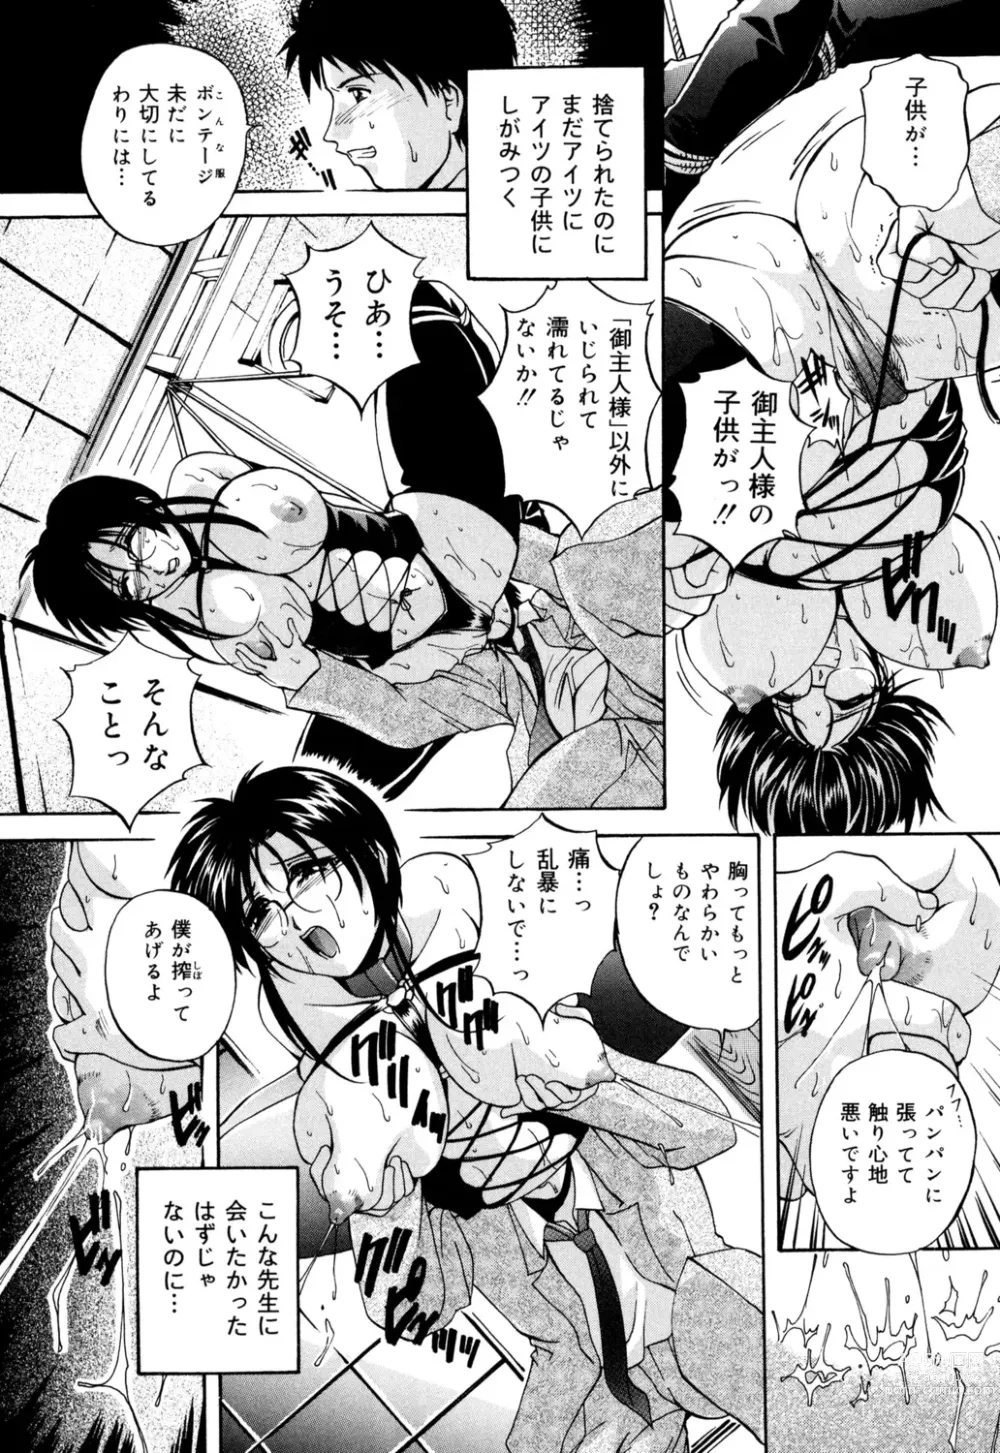 Page 137 of manga Kinshin Soukan Musume